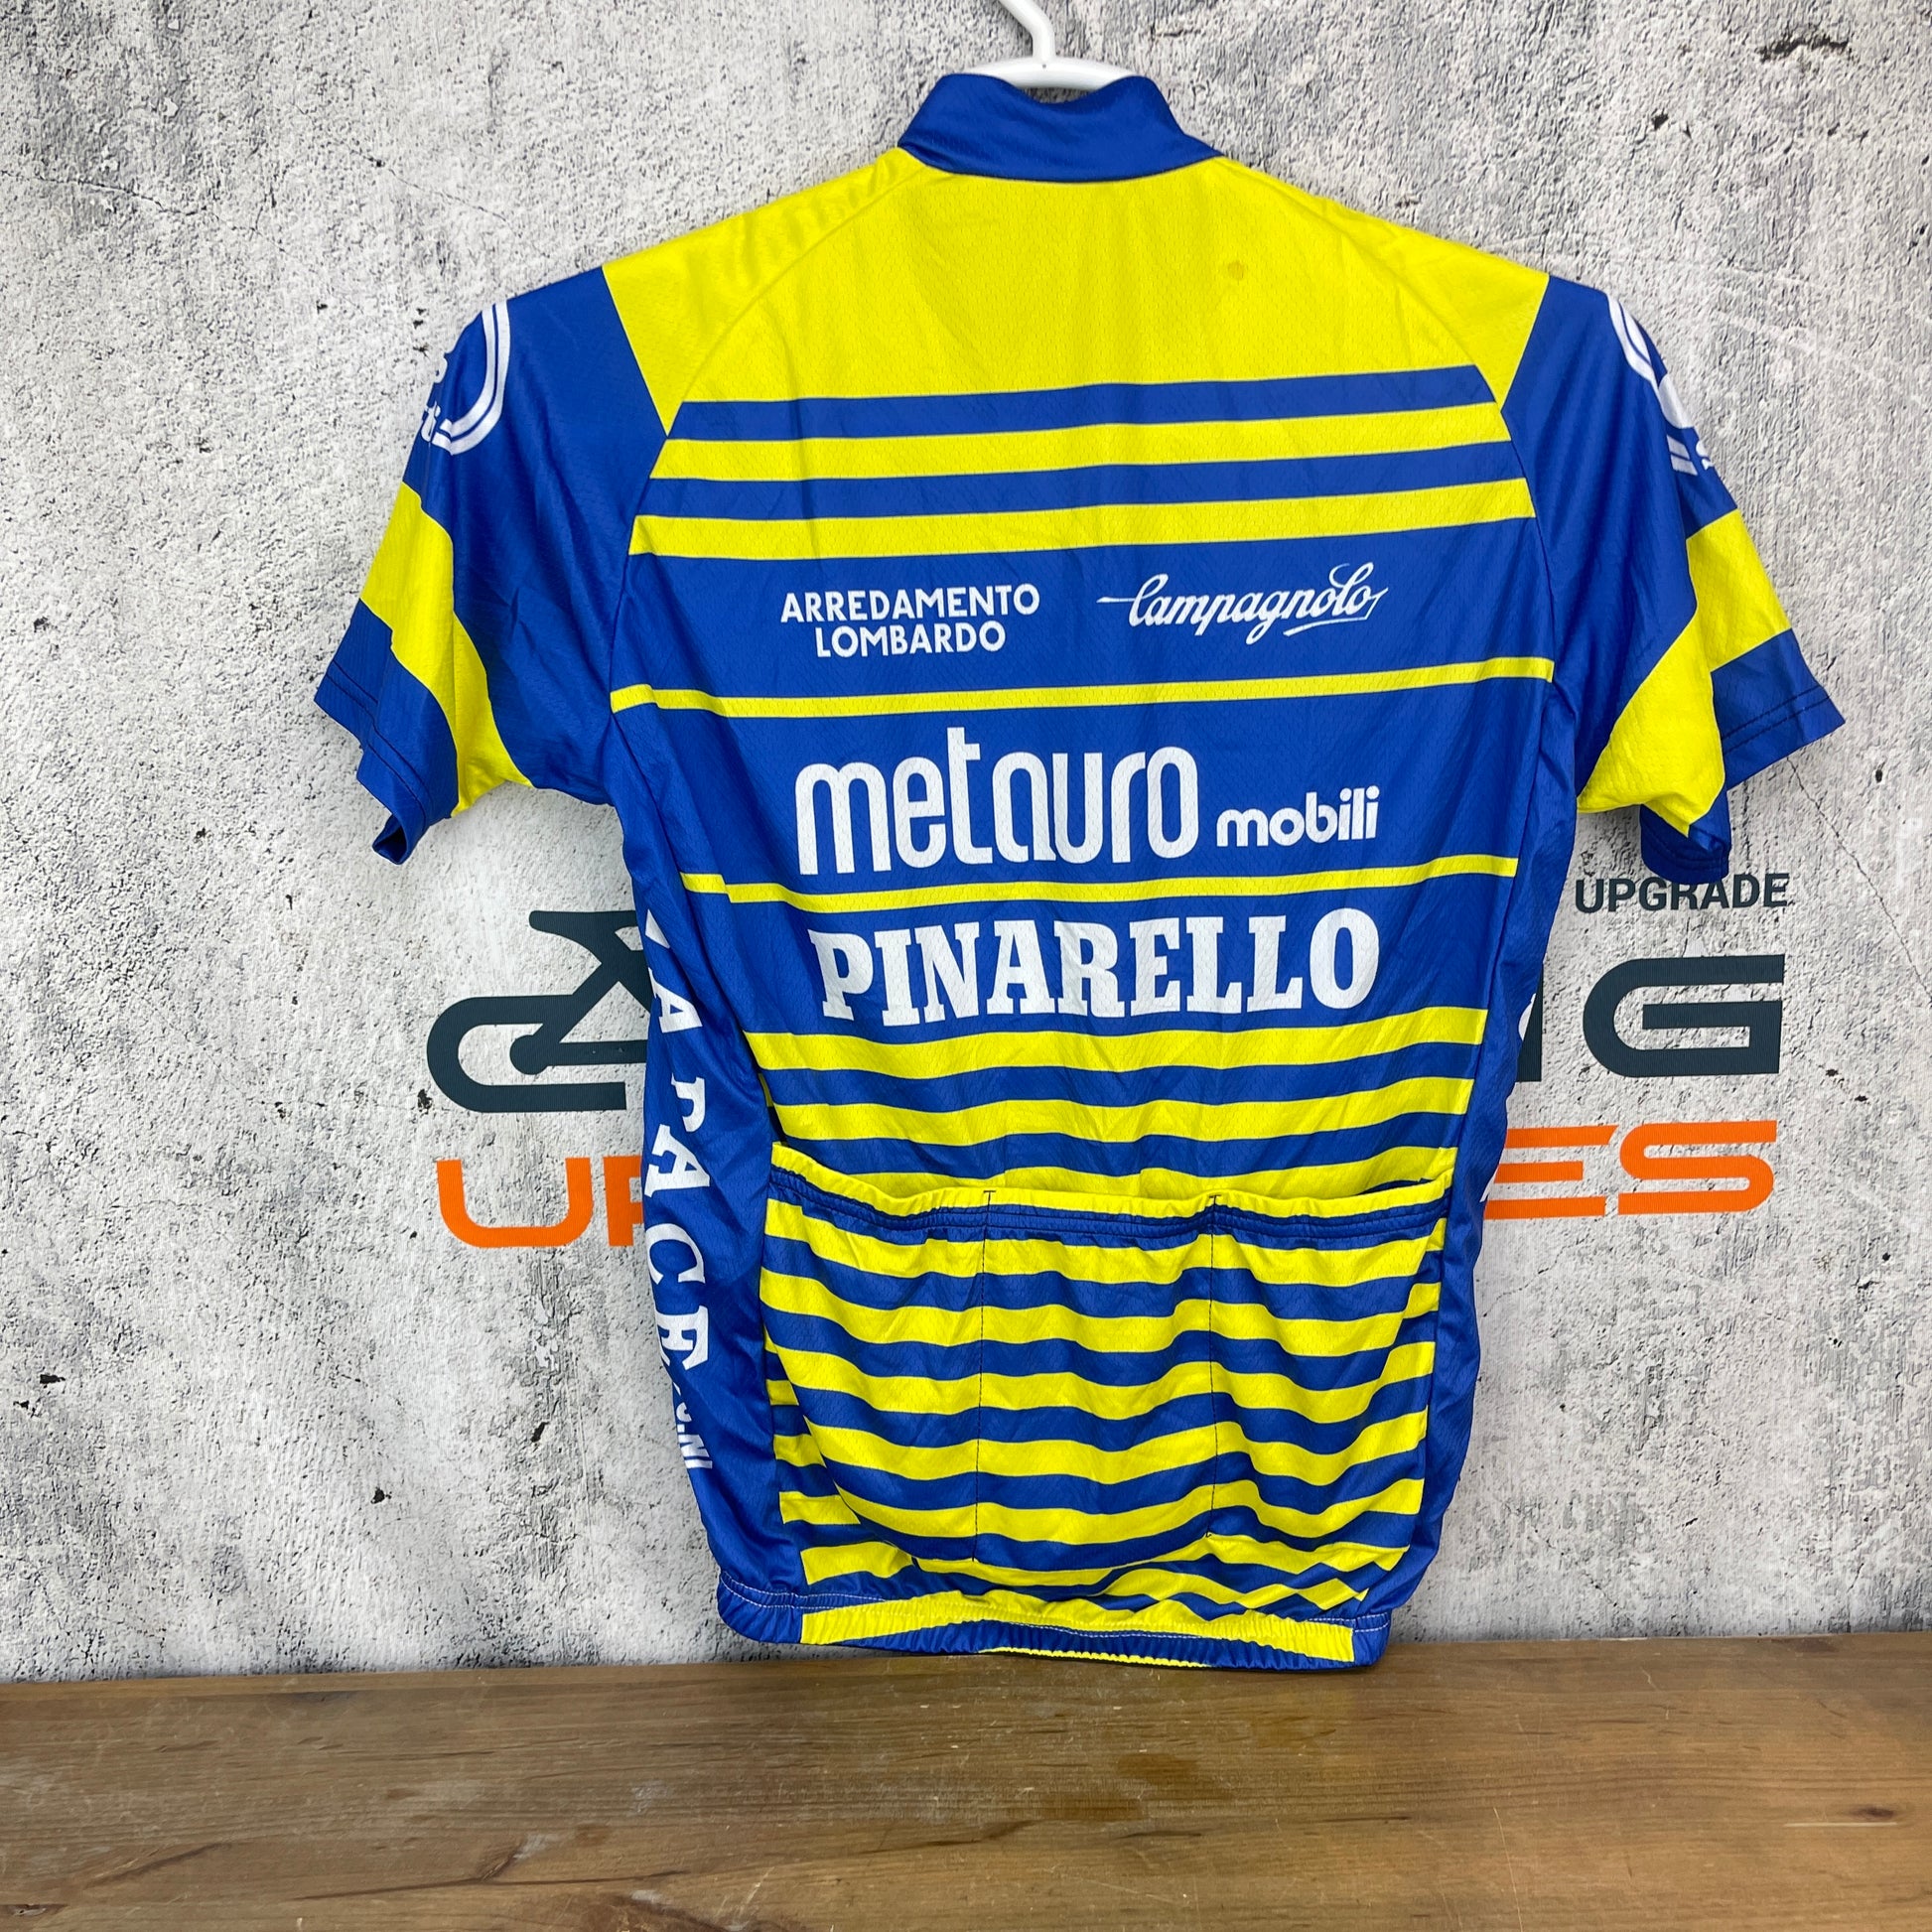 Vittoria Cycling Shoes 90s vintage cycling shirt - We Love Sports Shirts